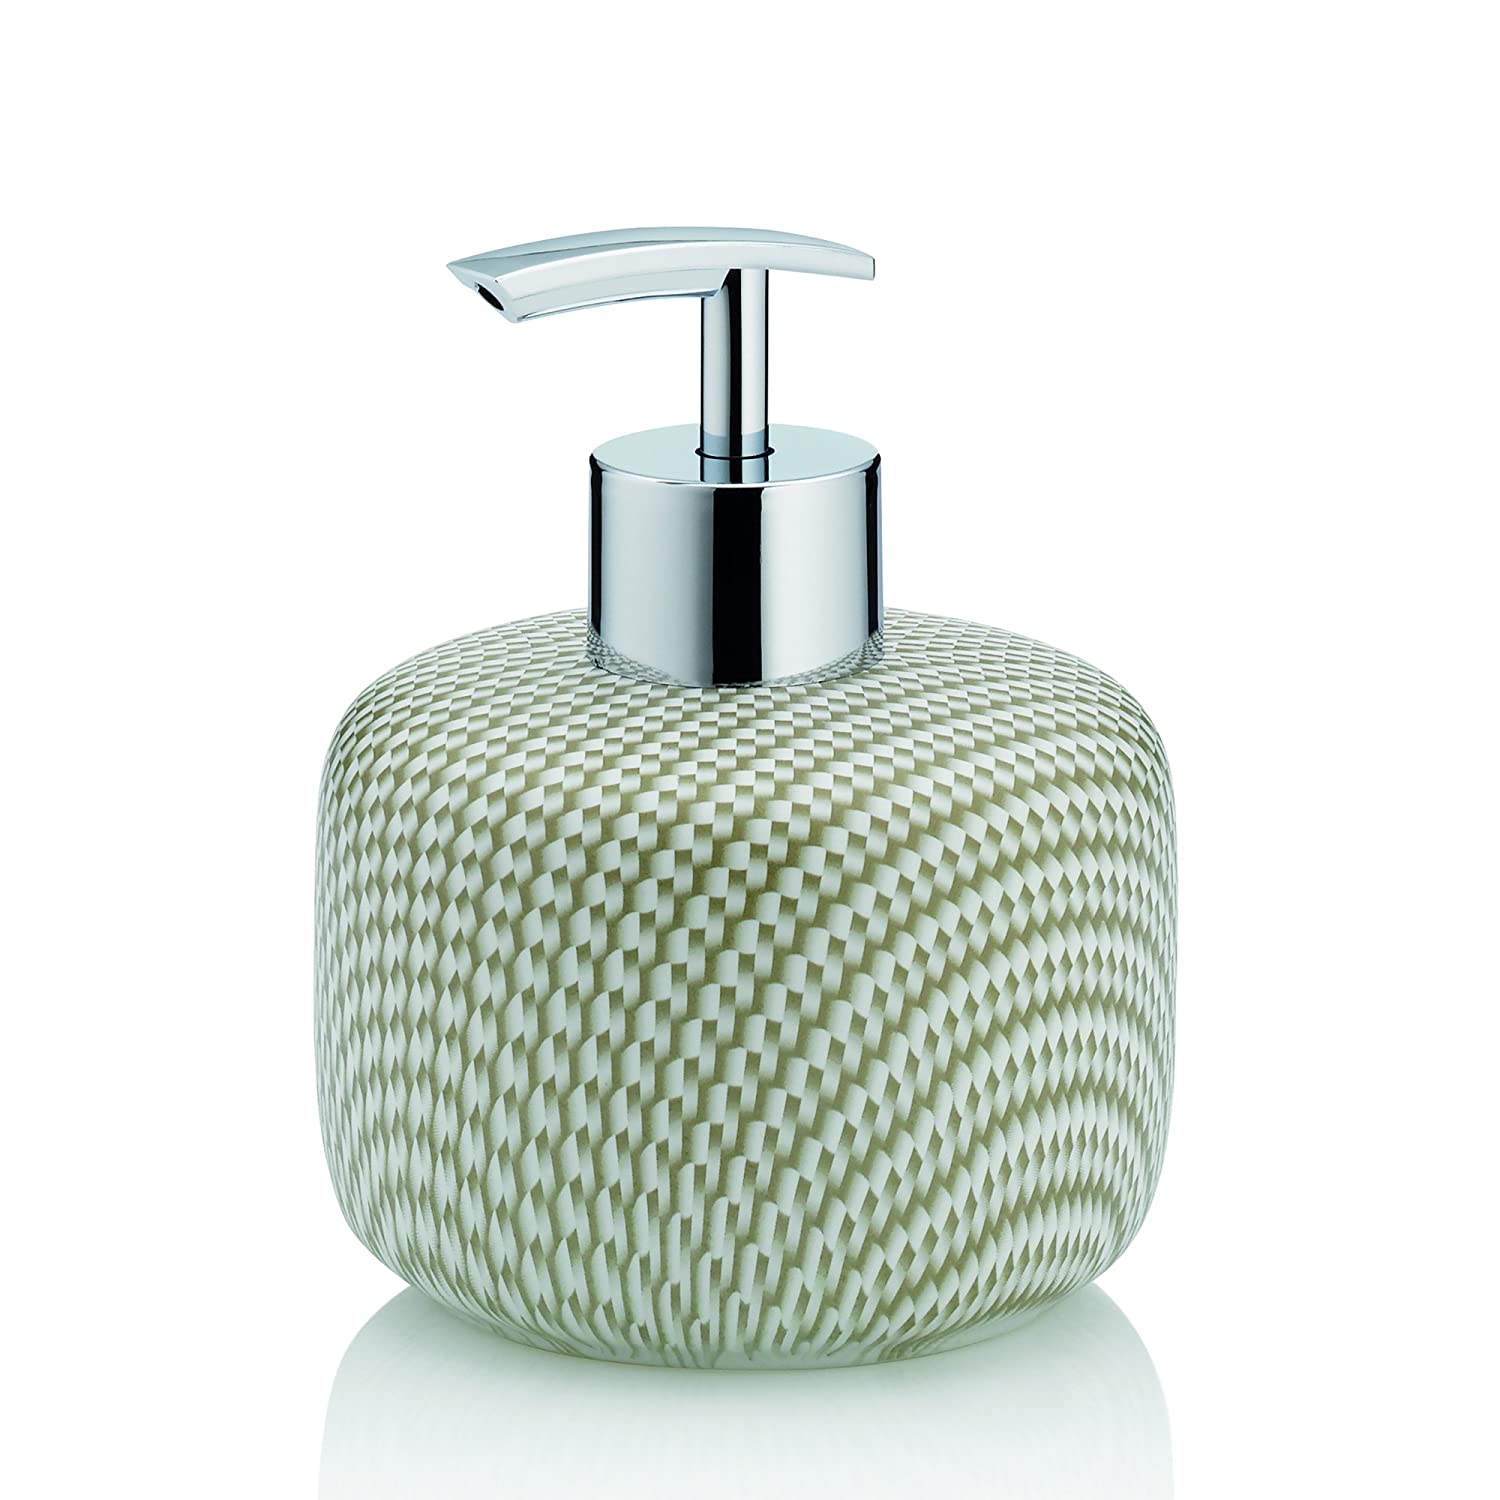 20207 Liquid soap dispenser Moreau Cearamic beige/white 10cm Ø, 11,5cm h, 350ml